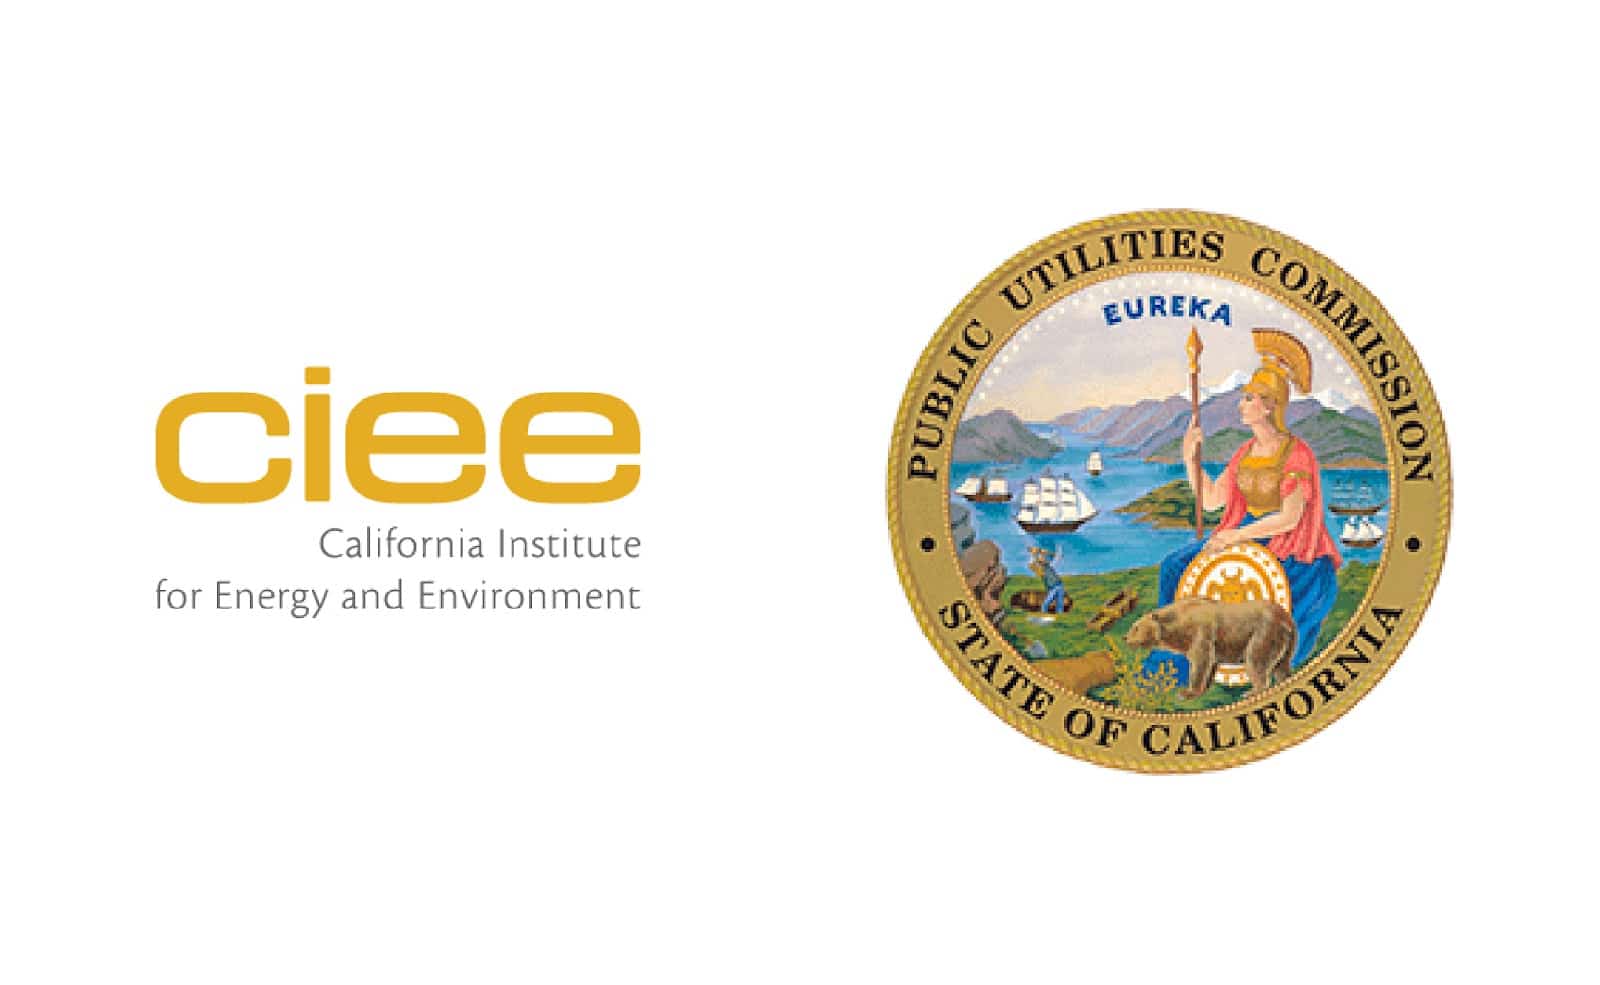 CIEE and CPUC logos